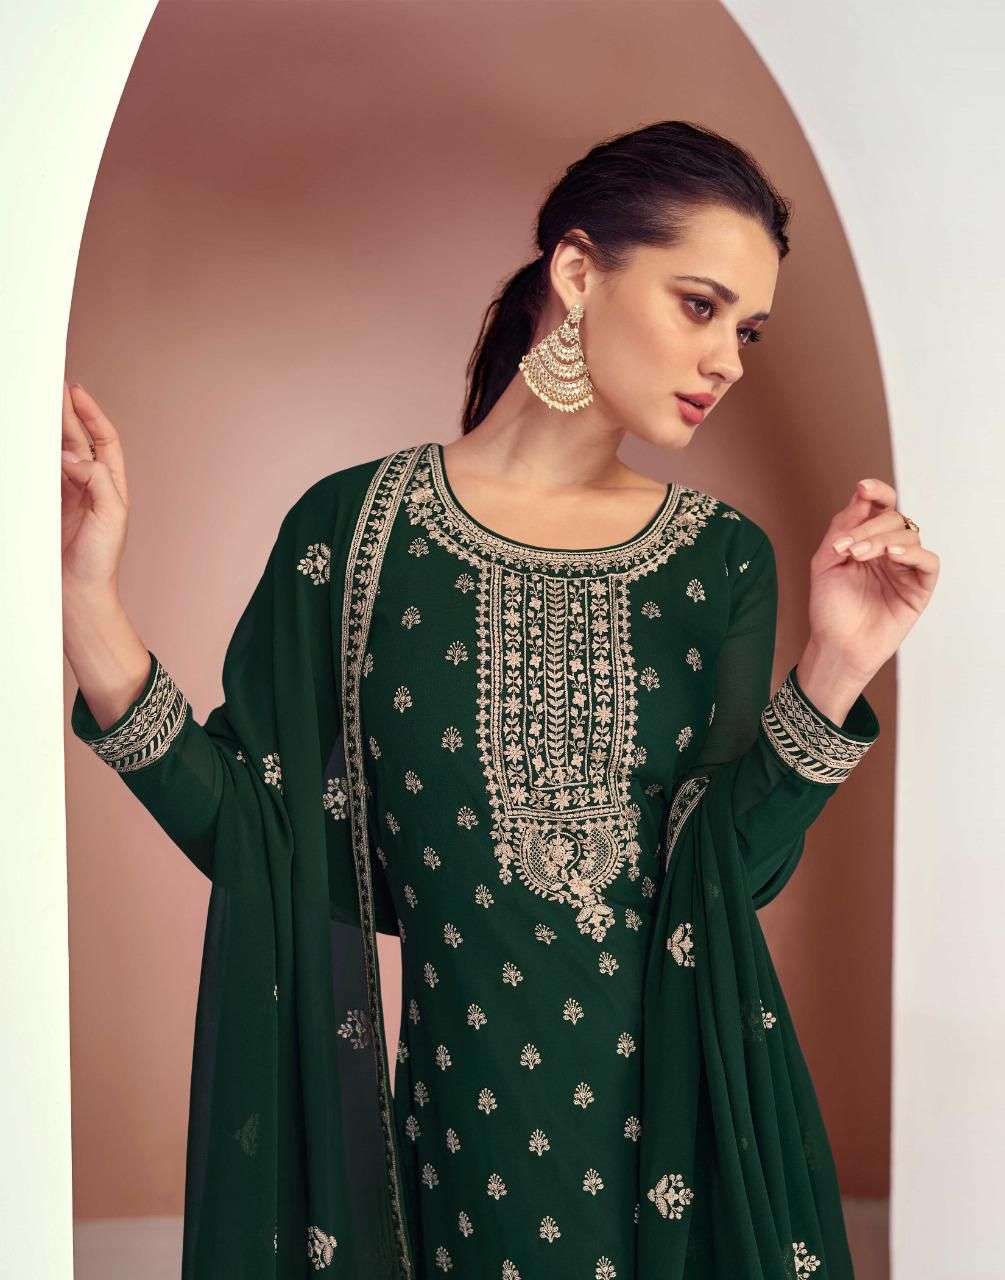 gulkayra dimple 7175-7178 series real georgette designer party wear salwar kameez collection online wholesaler surat